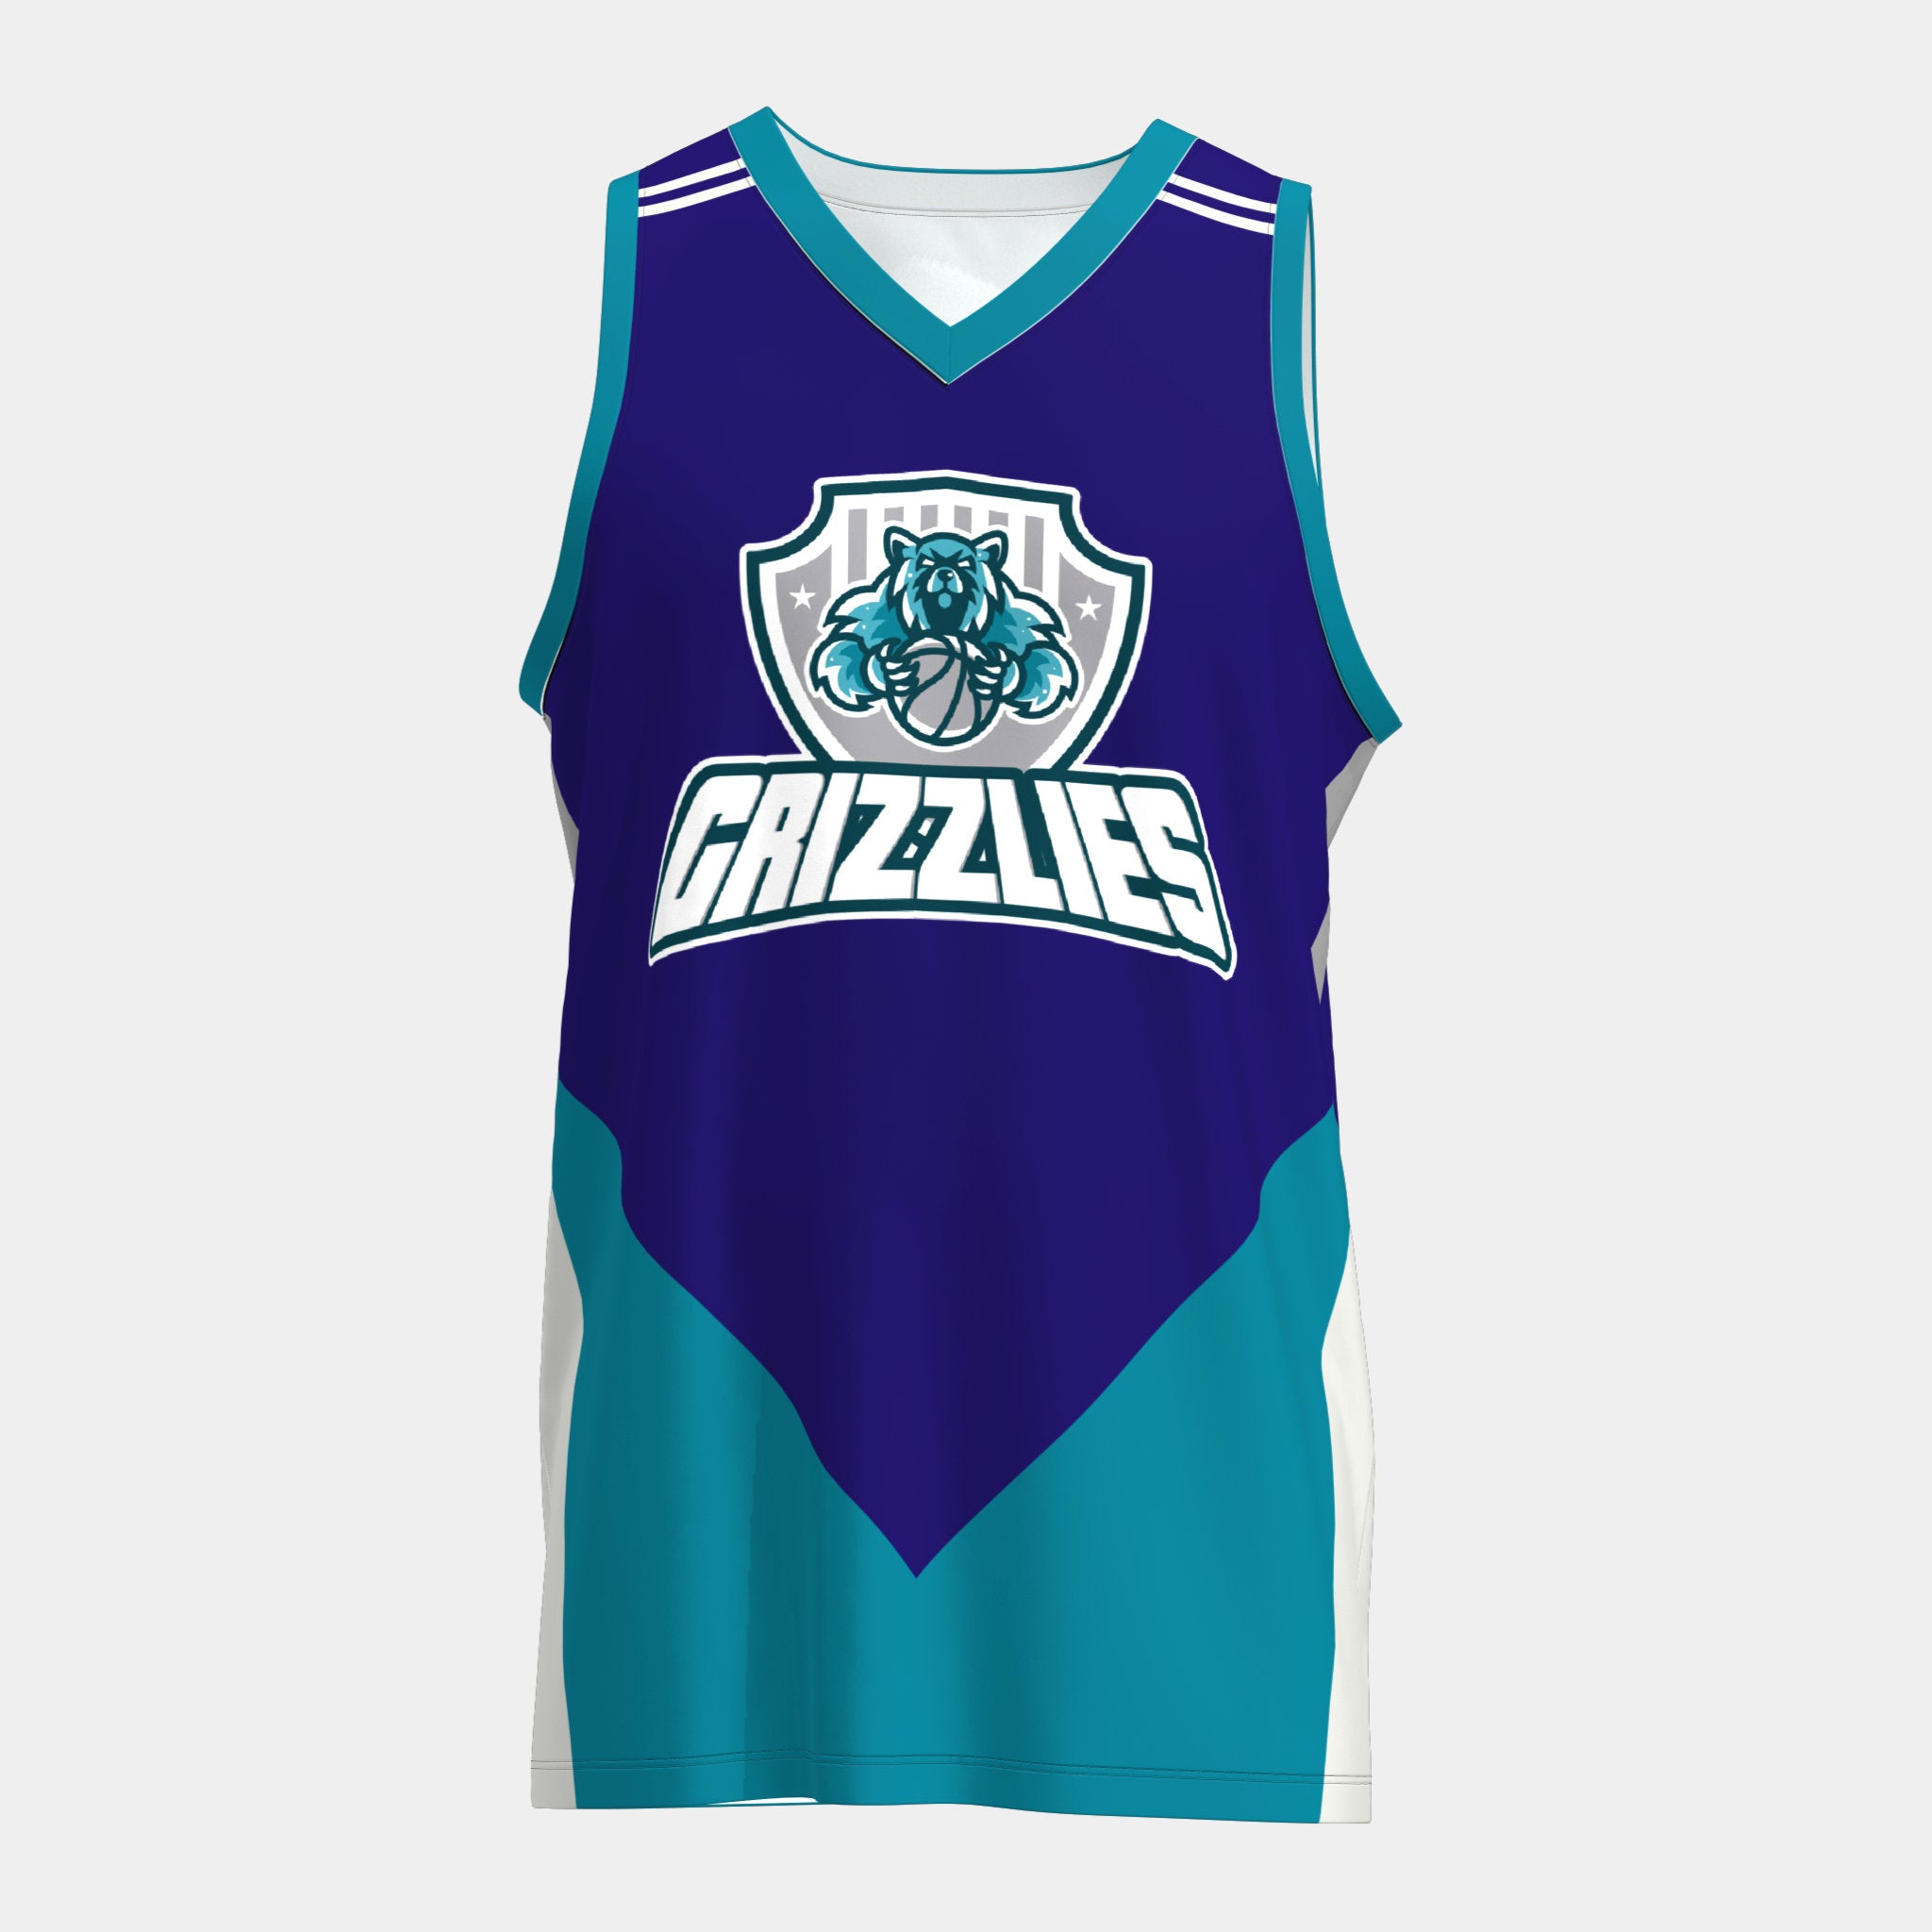 memphis grizzlies jersey design